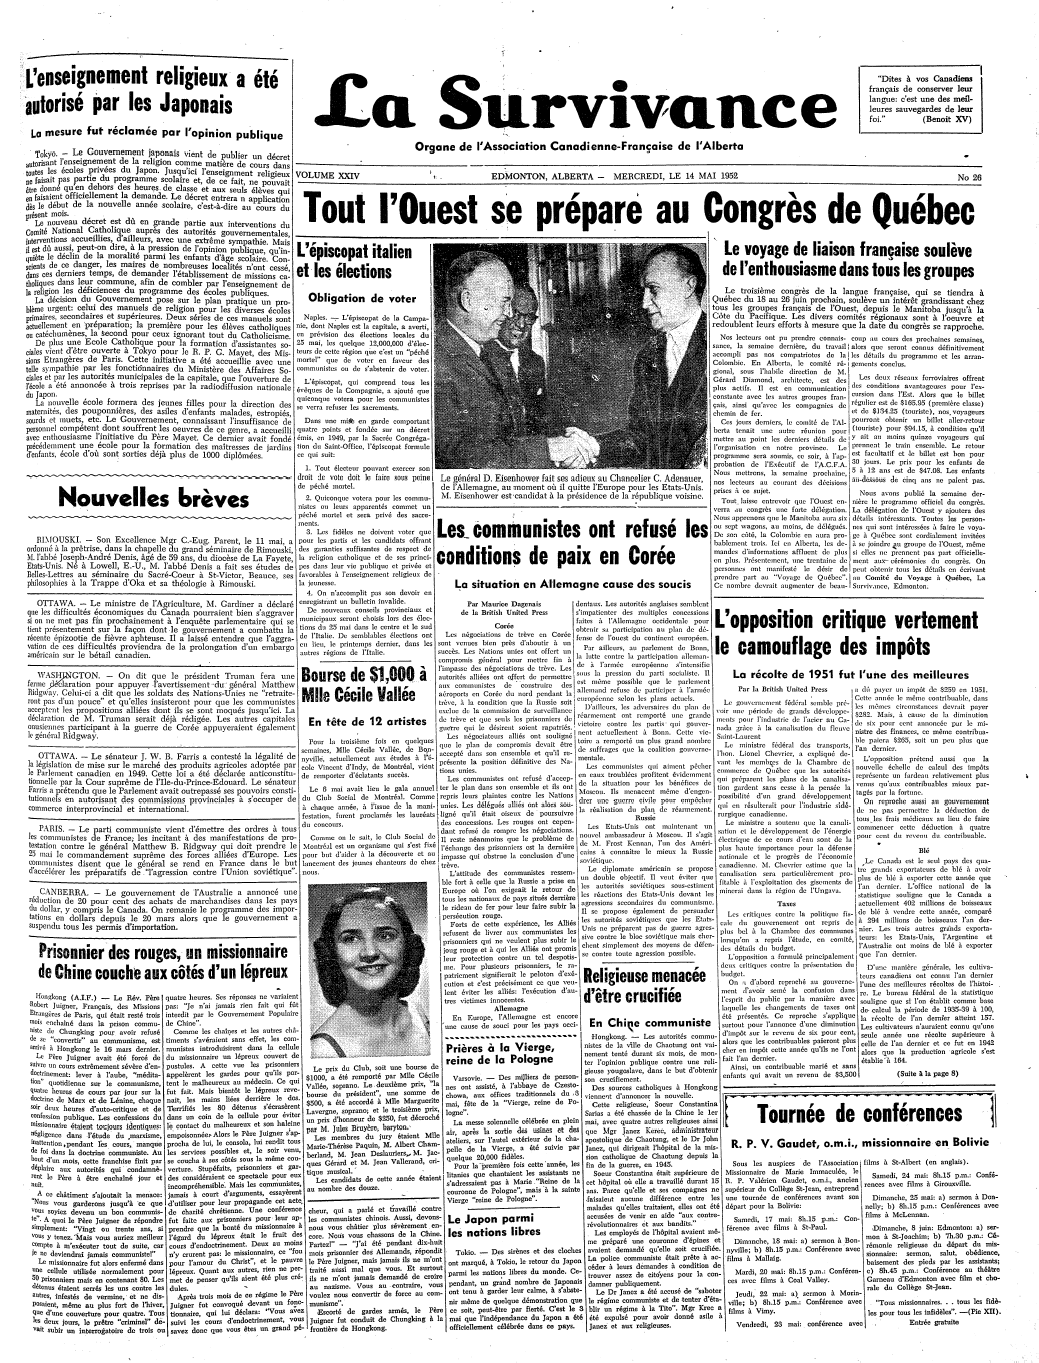 La survivance May 14, 1952 Page 1